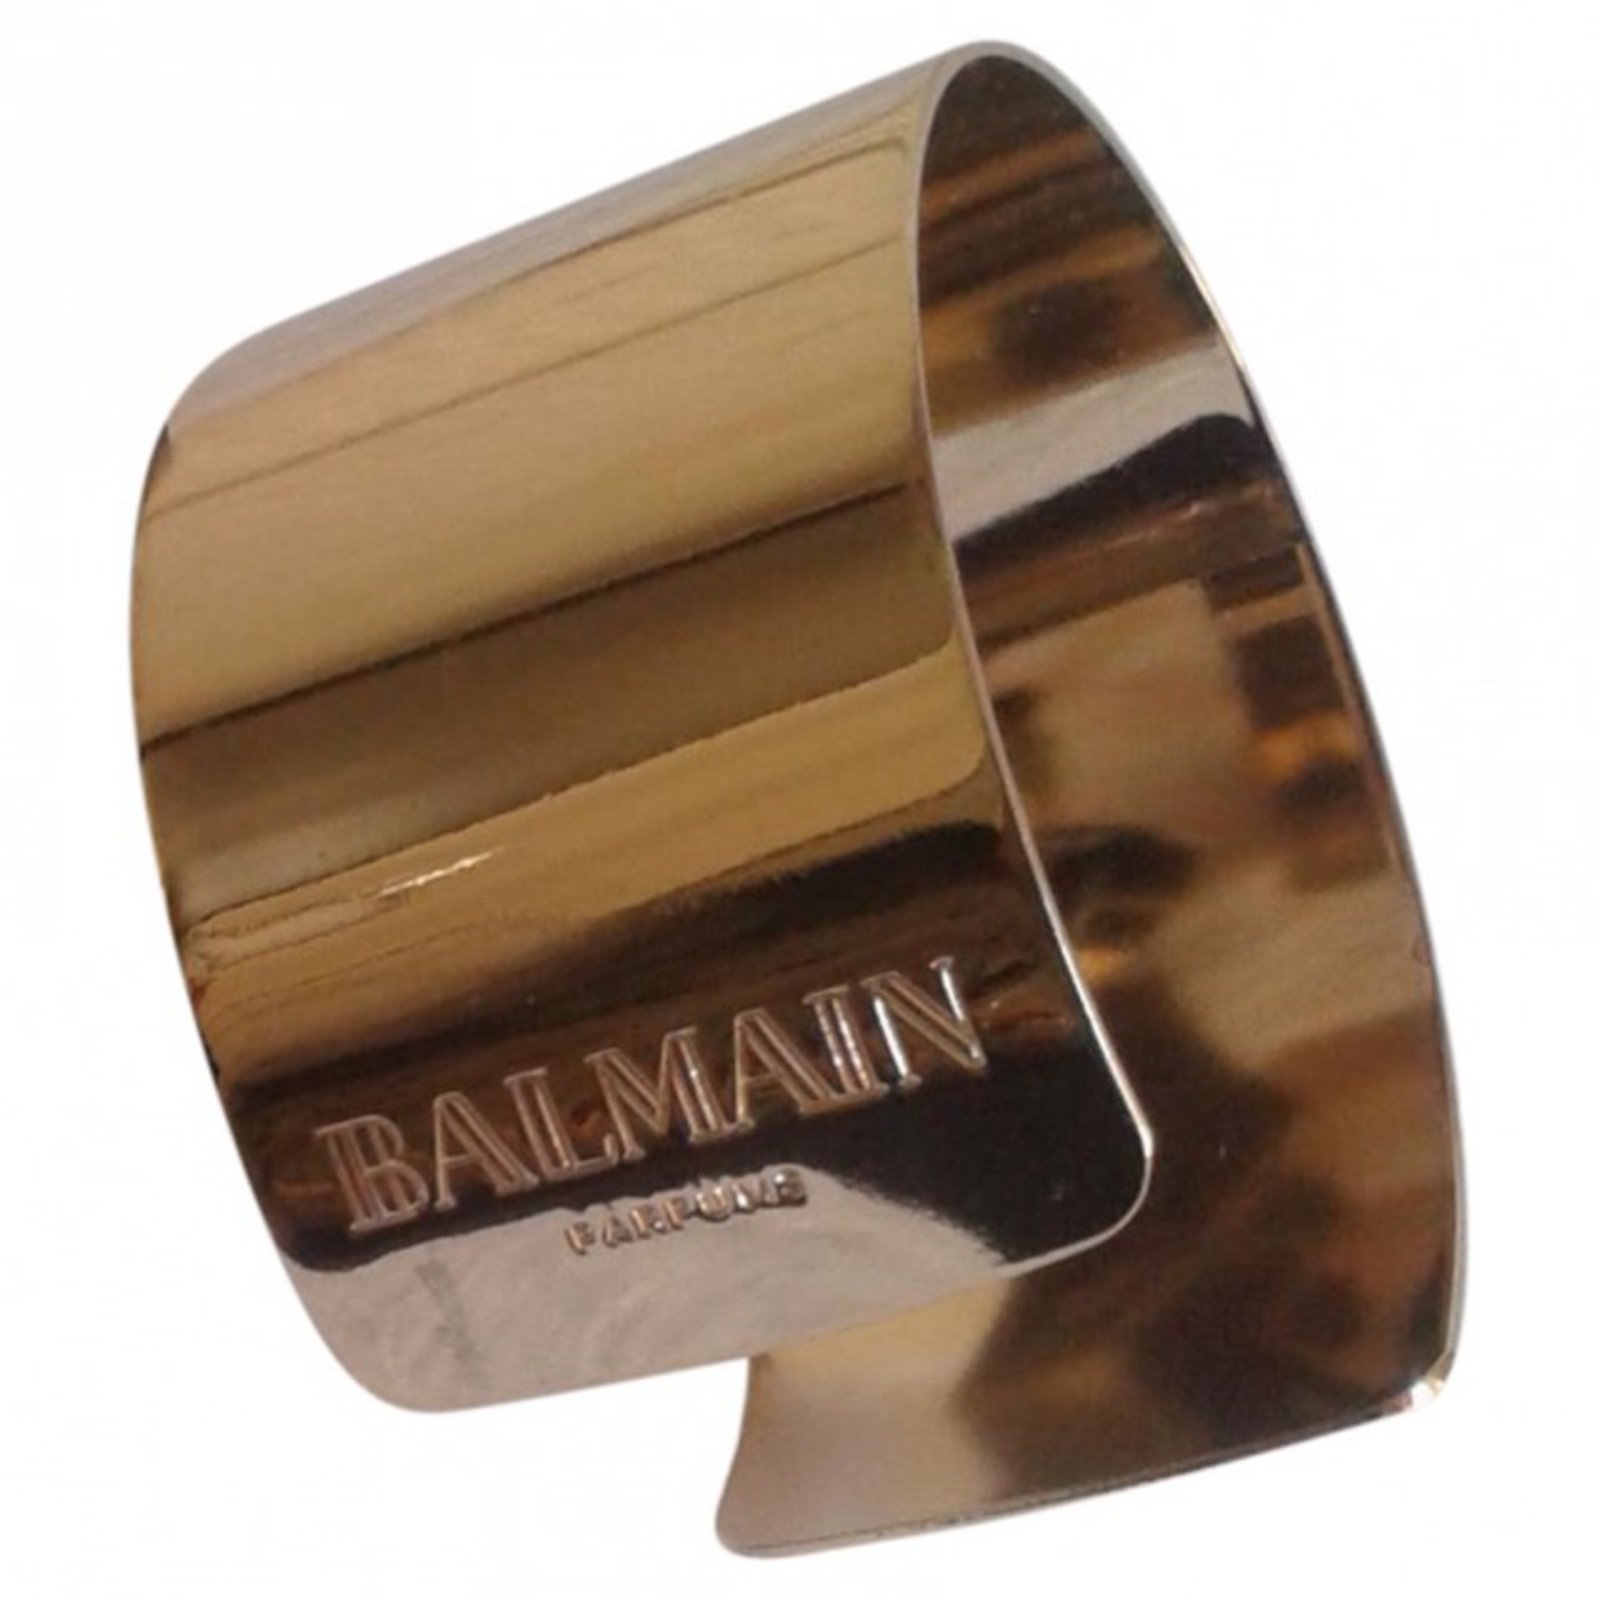 Balmain Gold Cuff Bracelet | eBay